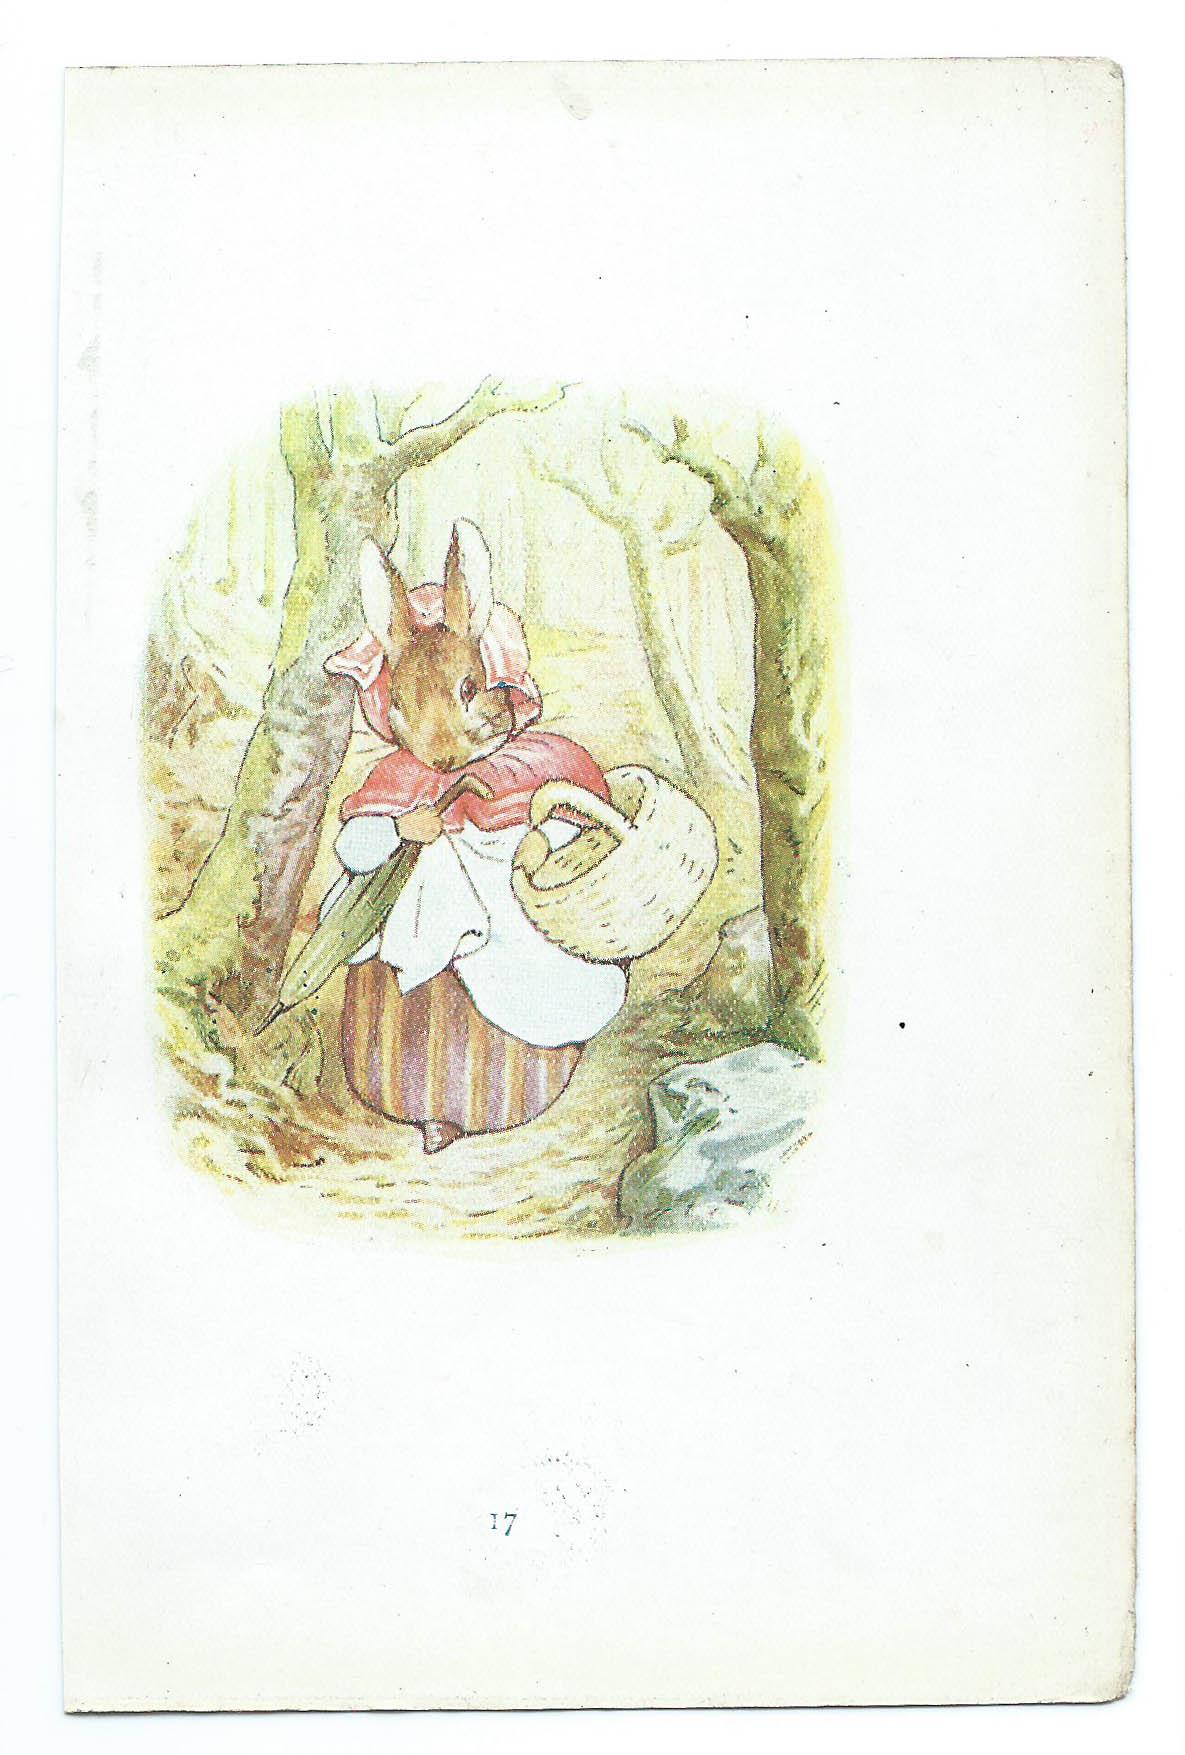 Other Original Vintage Peter Rabbit Print After Beatrix Potter. C.1920